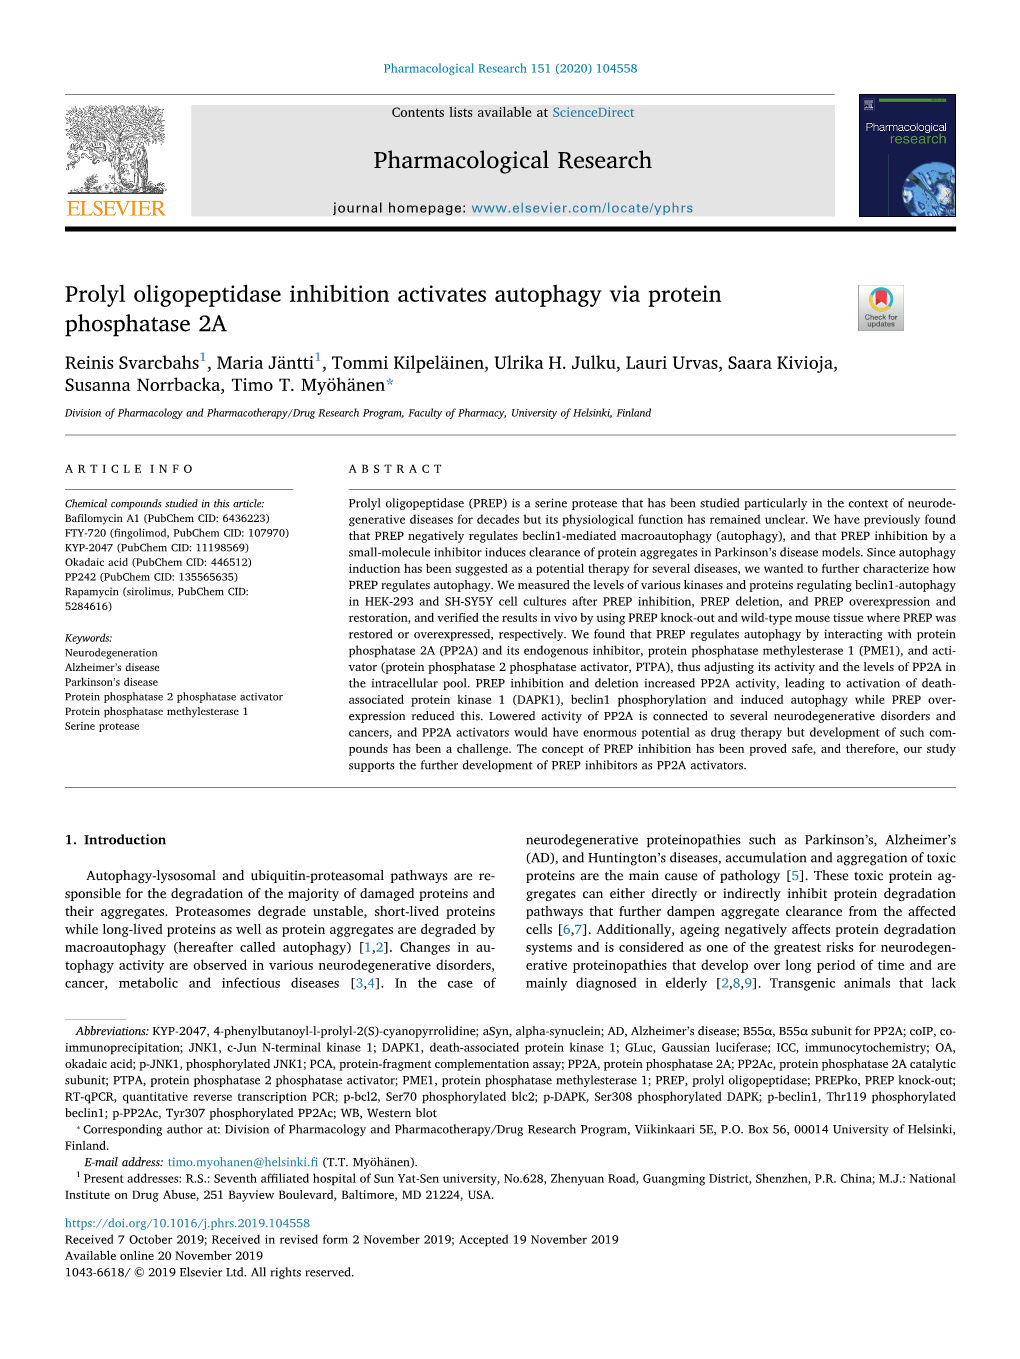 Prolyl Oligopeptidase Inhibition Activates Autophagy Via Protein Phosphatase 2A T